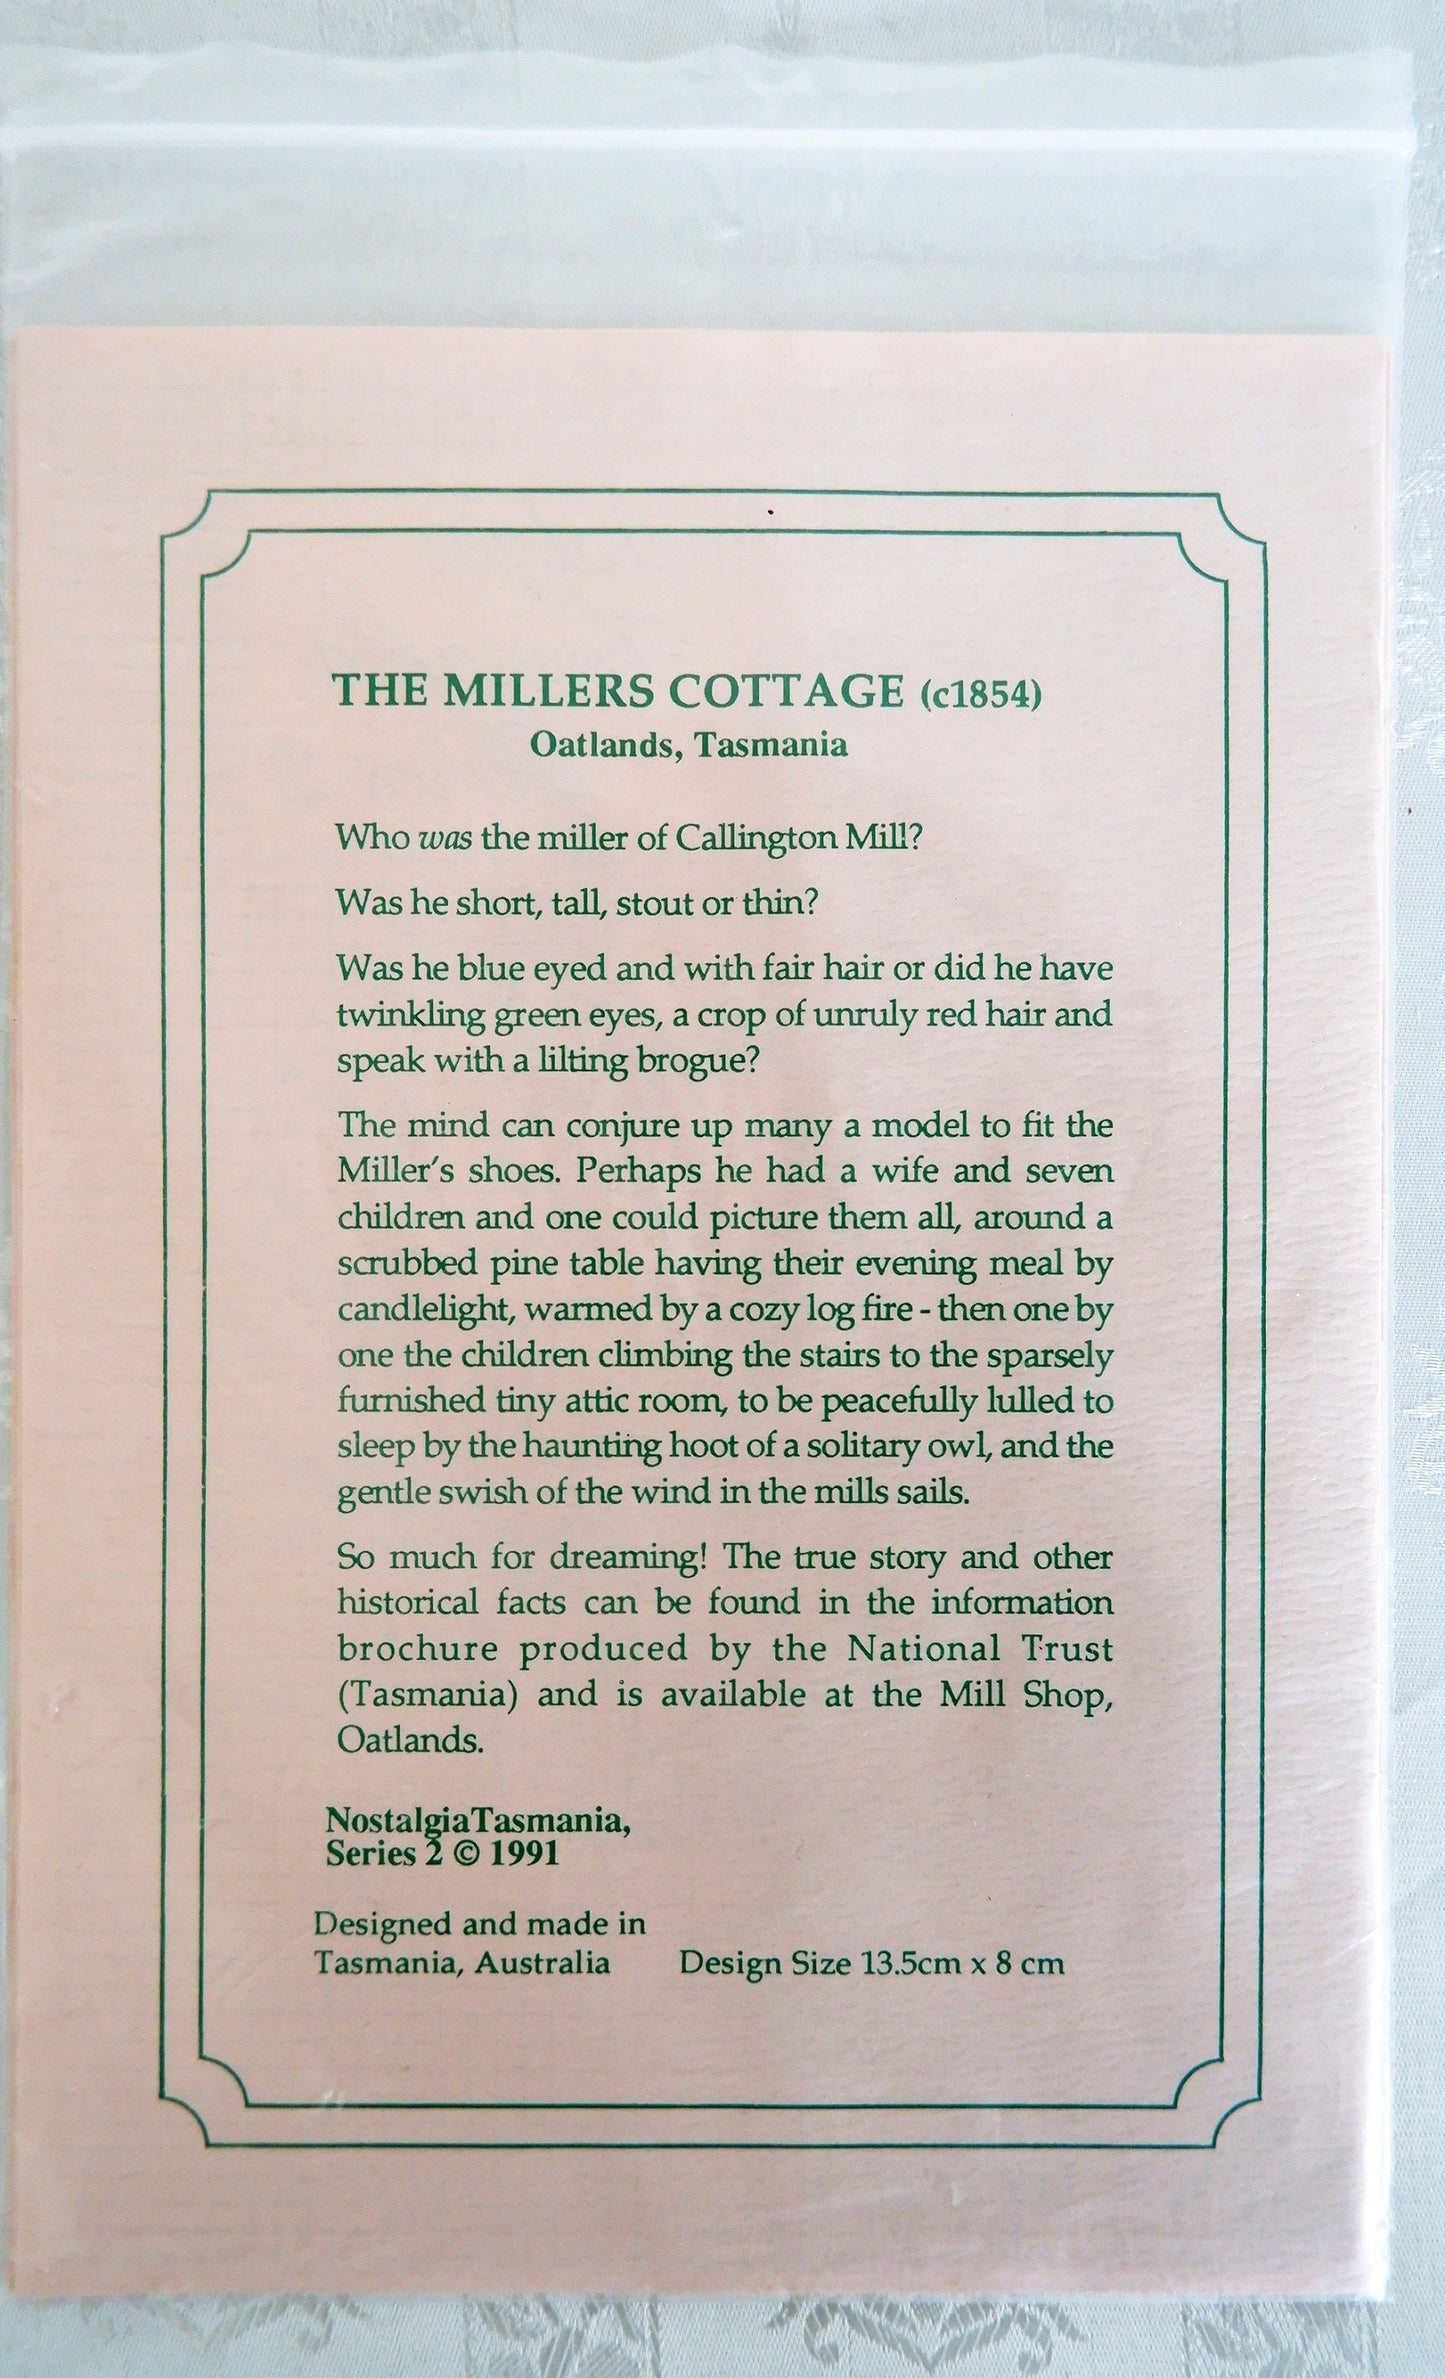 The Millers Cottage, Cross Stitch pattern, DIY Kit, Nostalgia Tasmania Series 2